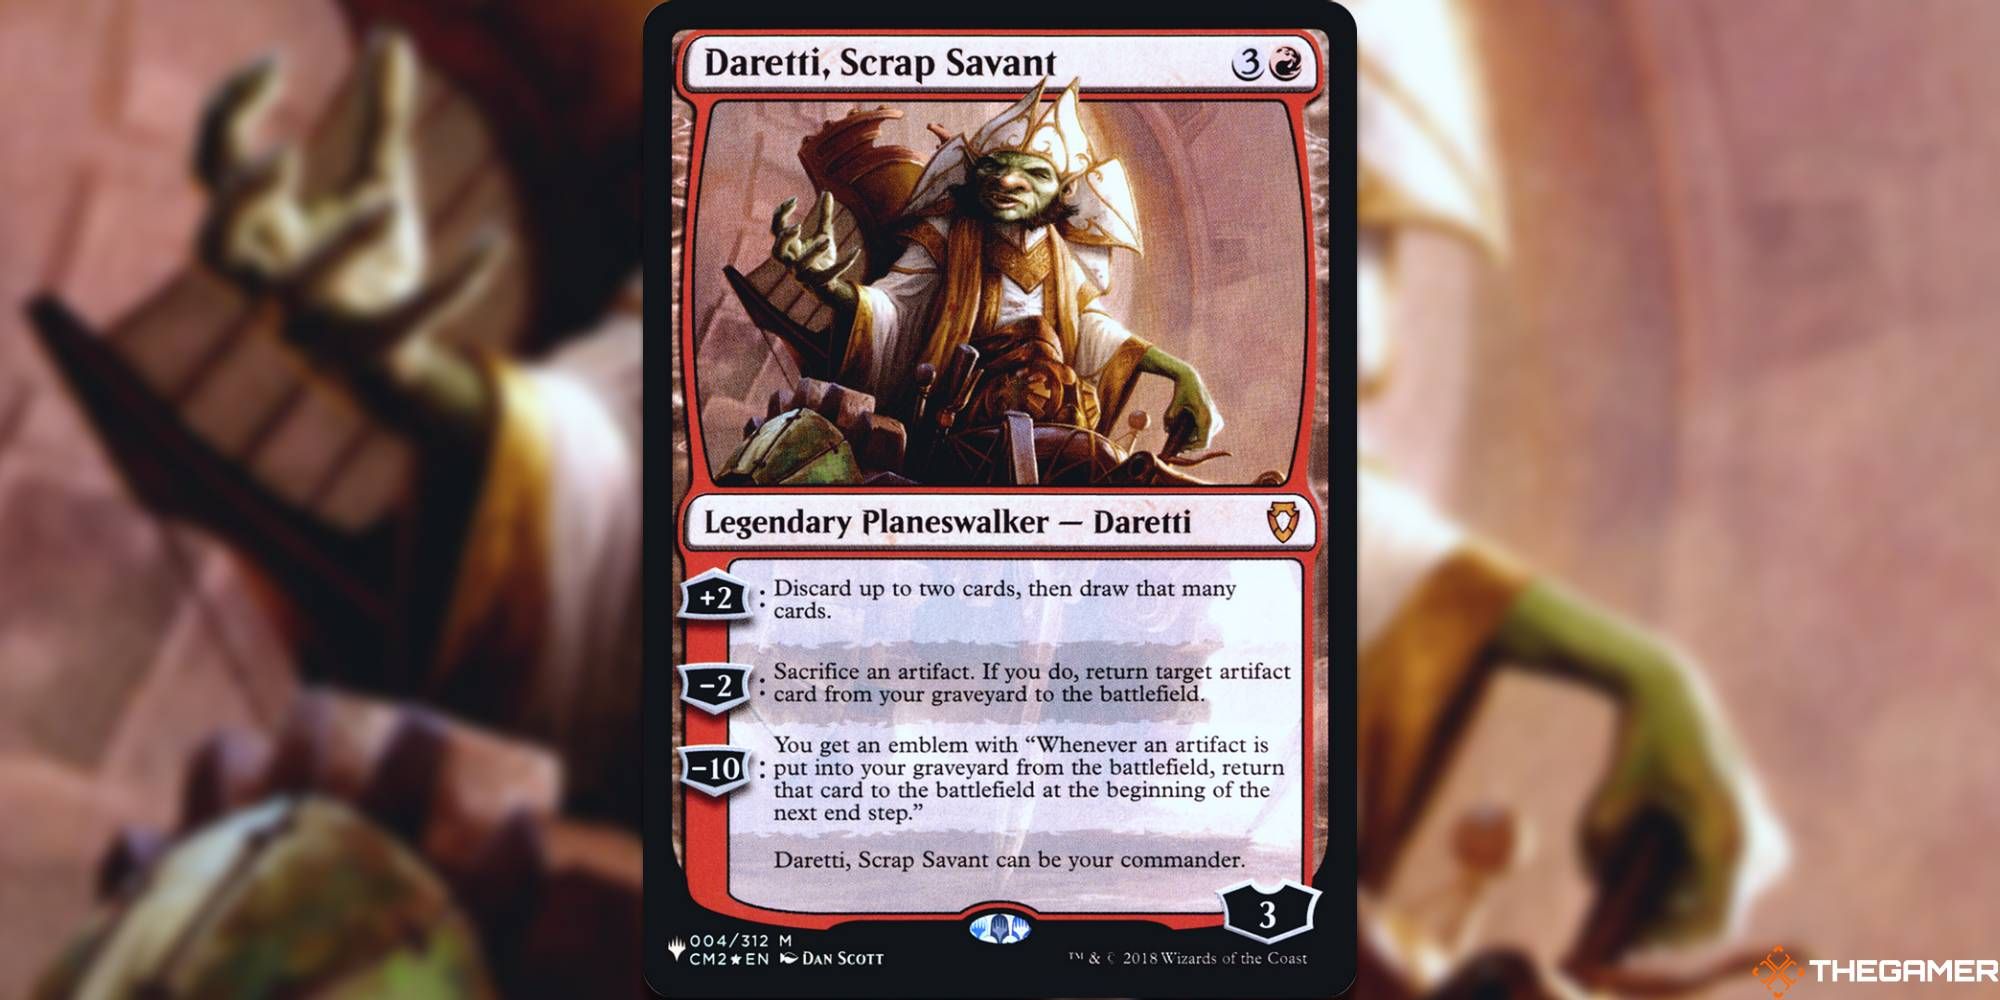 Daretti, Scrap Savant Magic: The Gathering card overlaid over artwork.